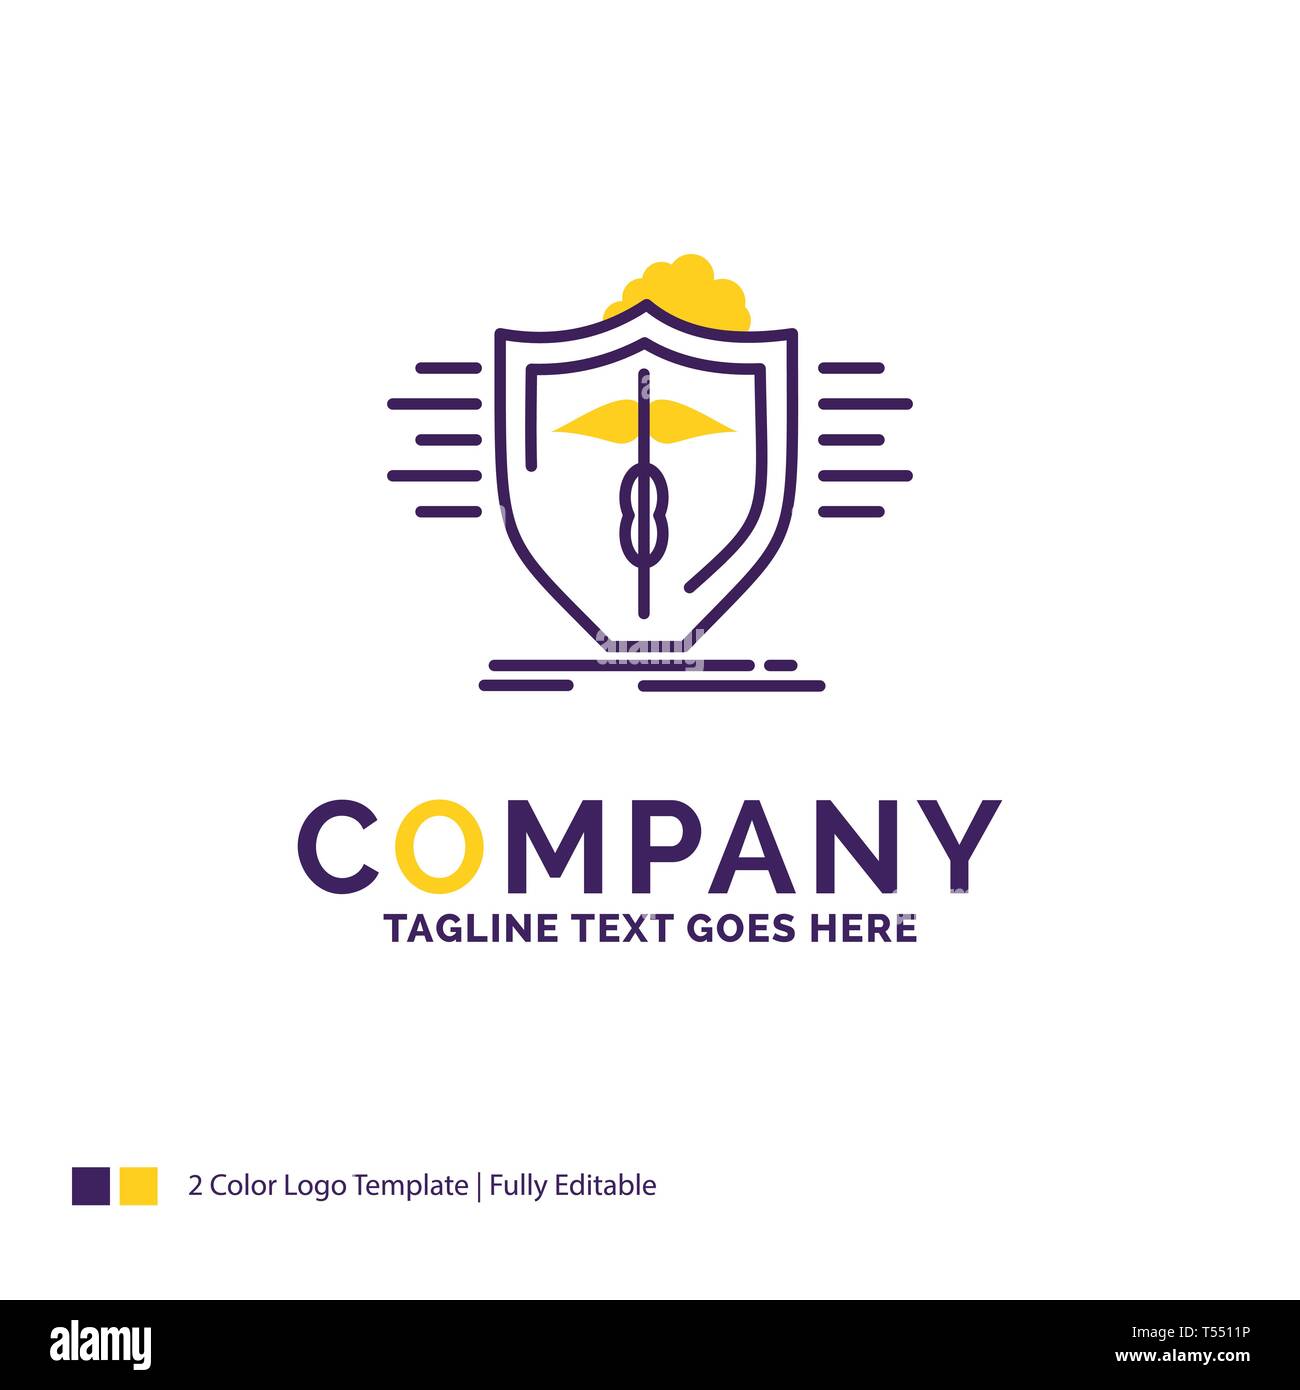 Company Name Logo Design For Insurance Health Medical